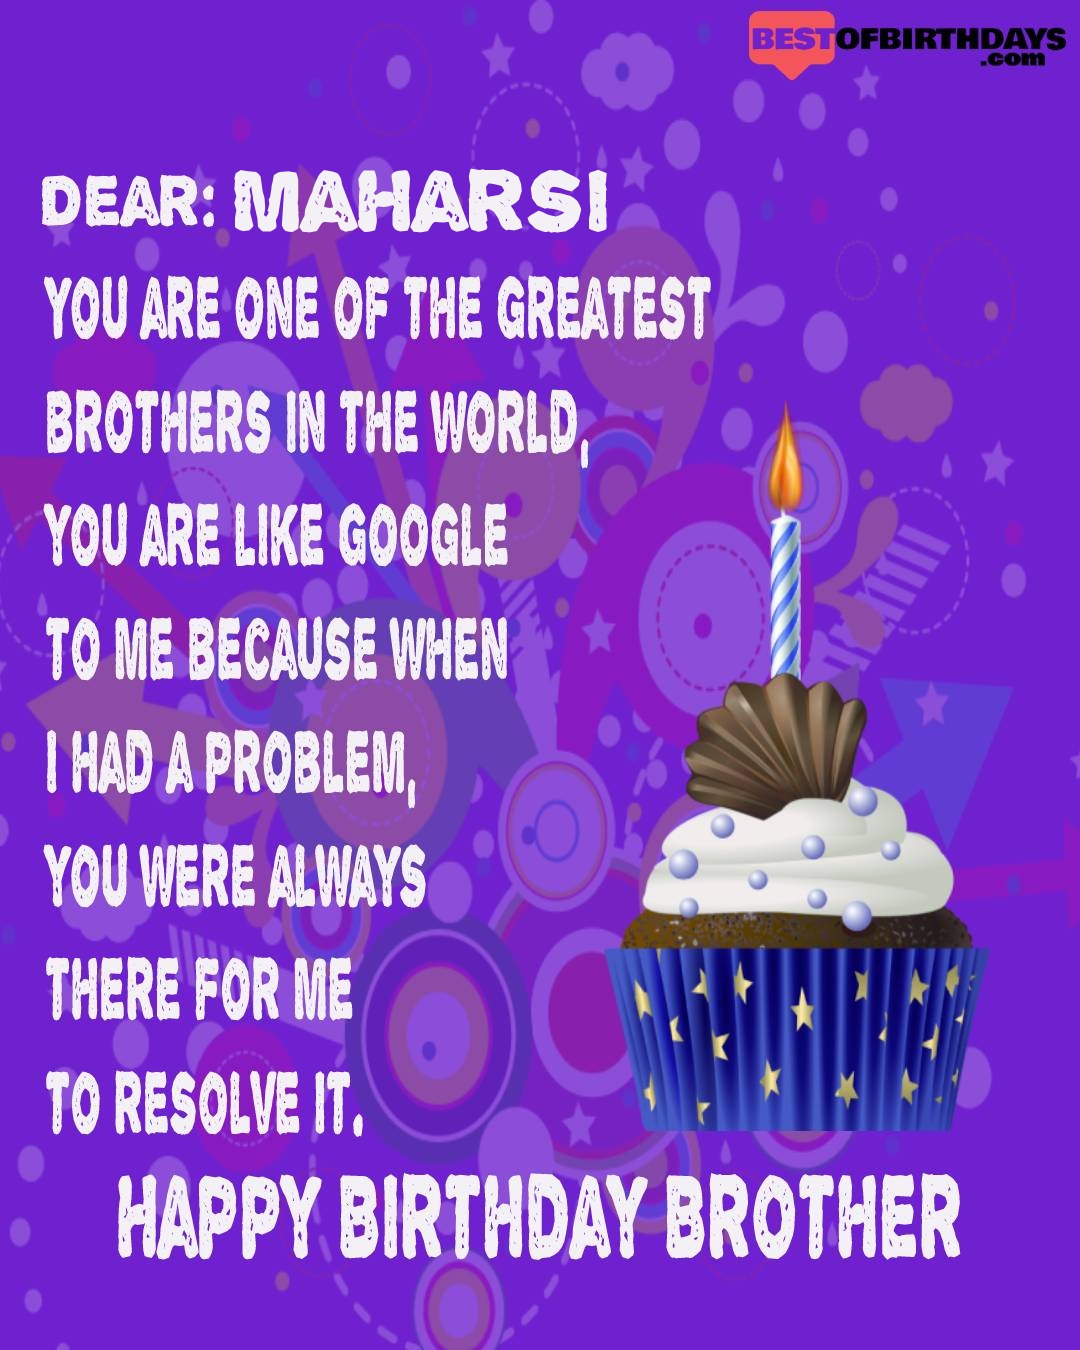 Happy birthday maharsi bhai brother bro